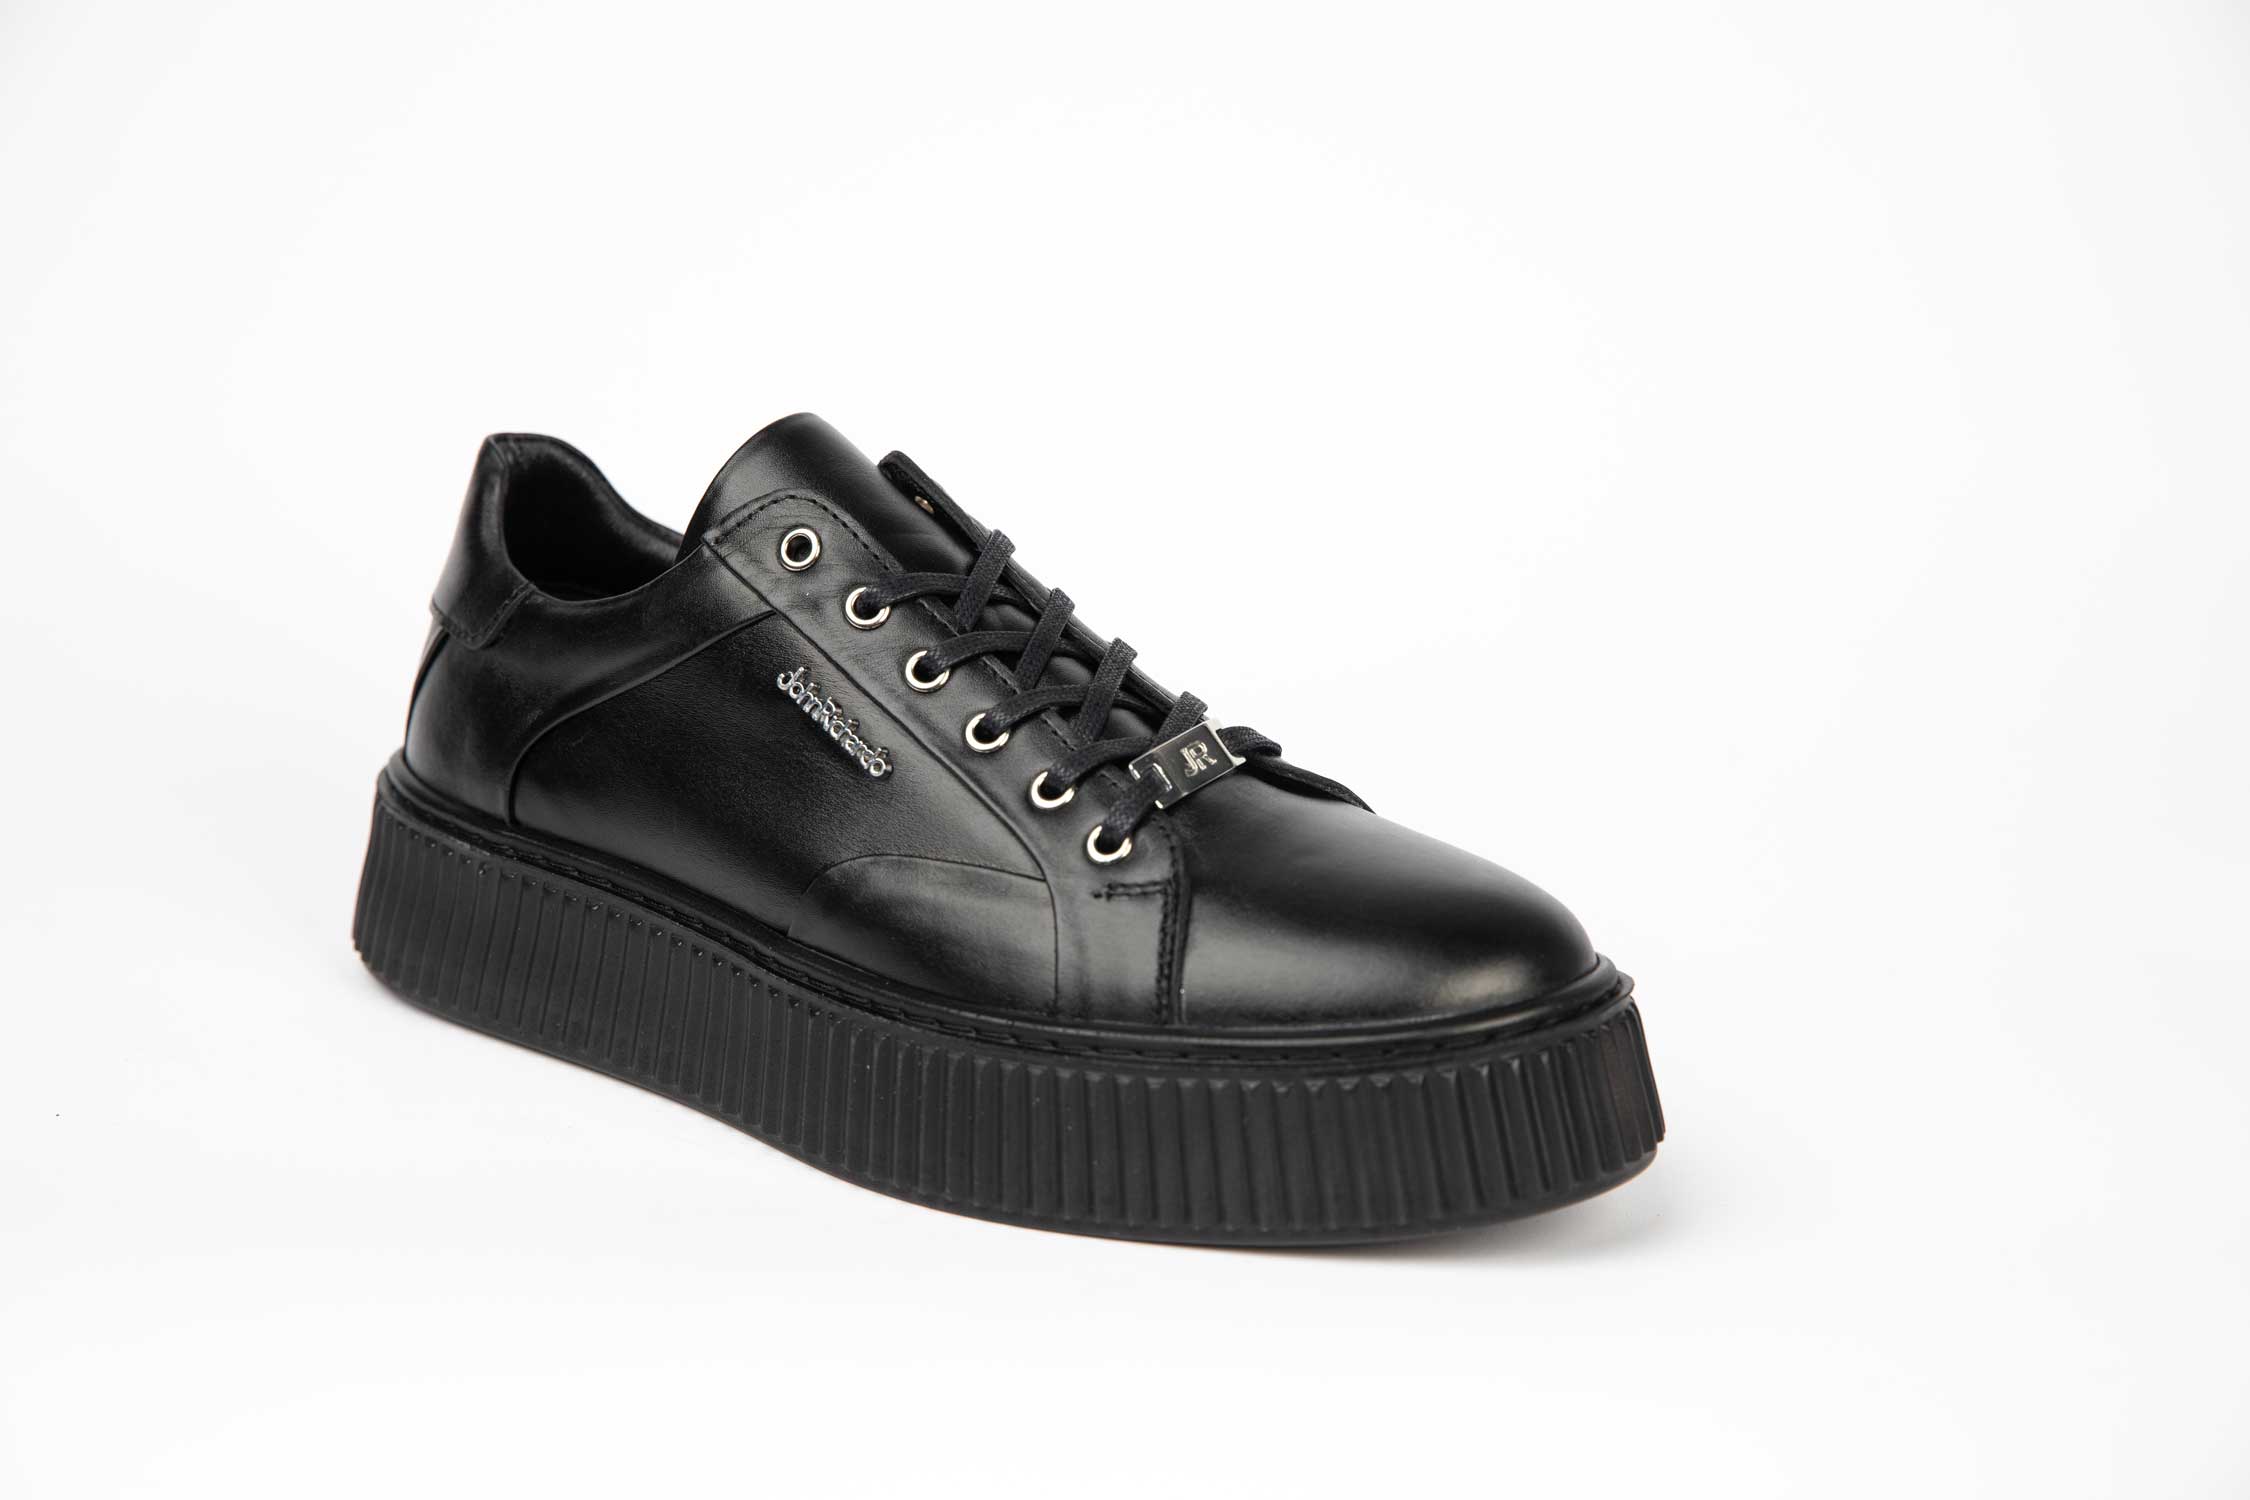 Pantofi barbati casual din piele naturala JOHN RICHARDO 138 negru (Black)